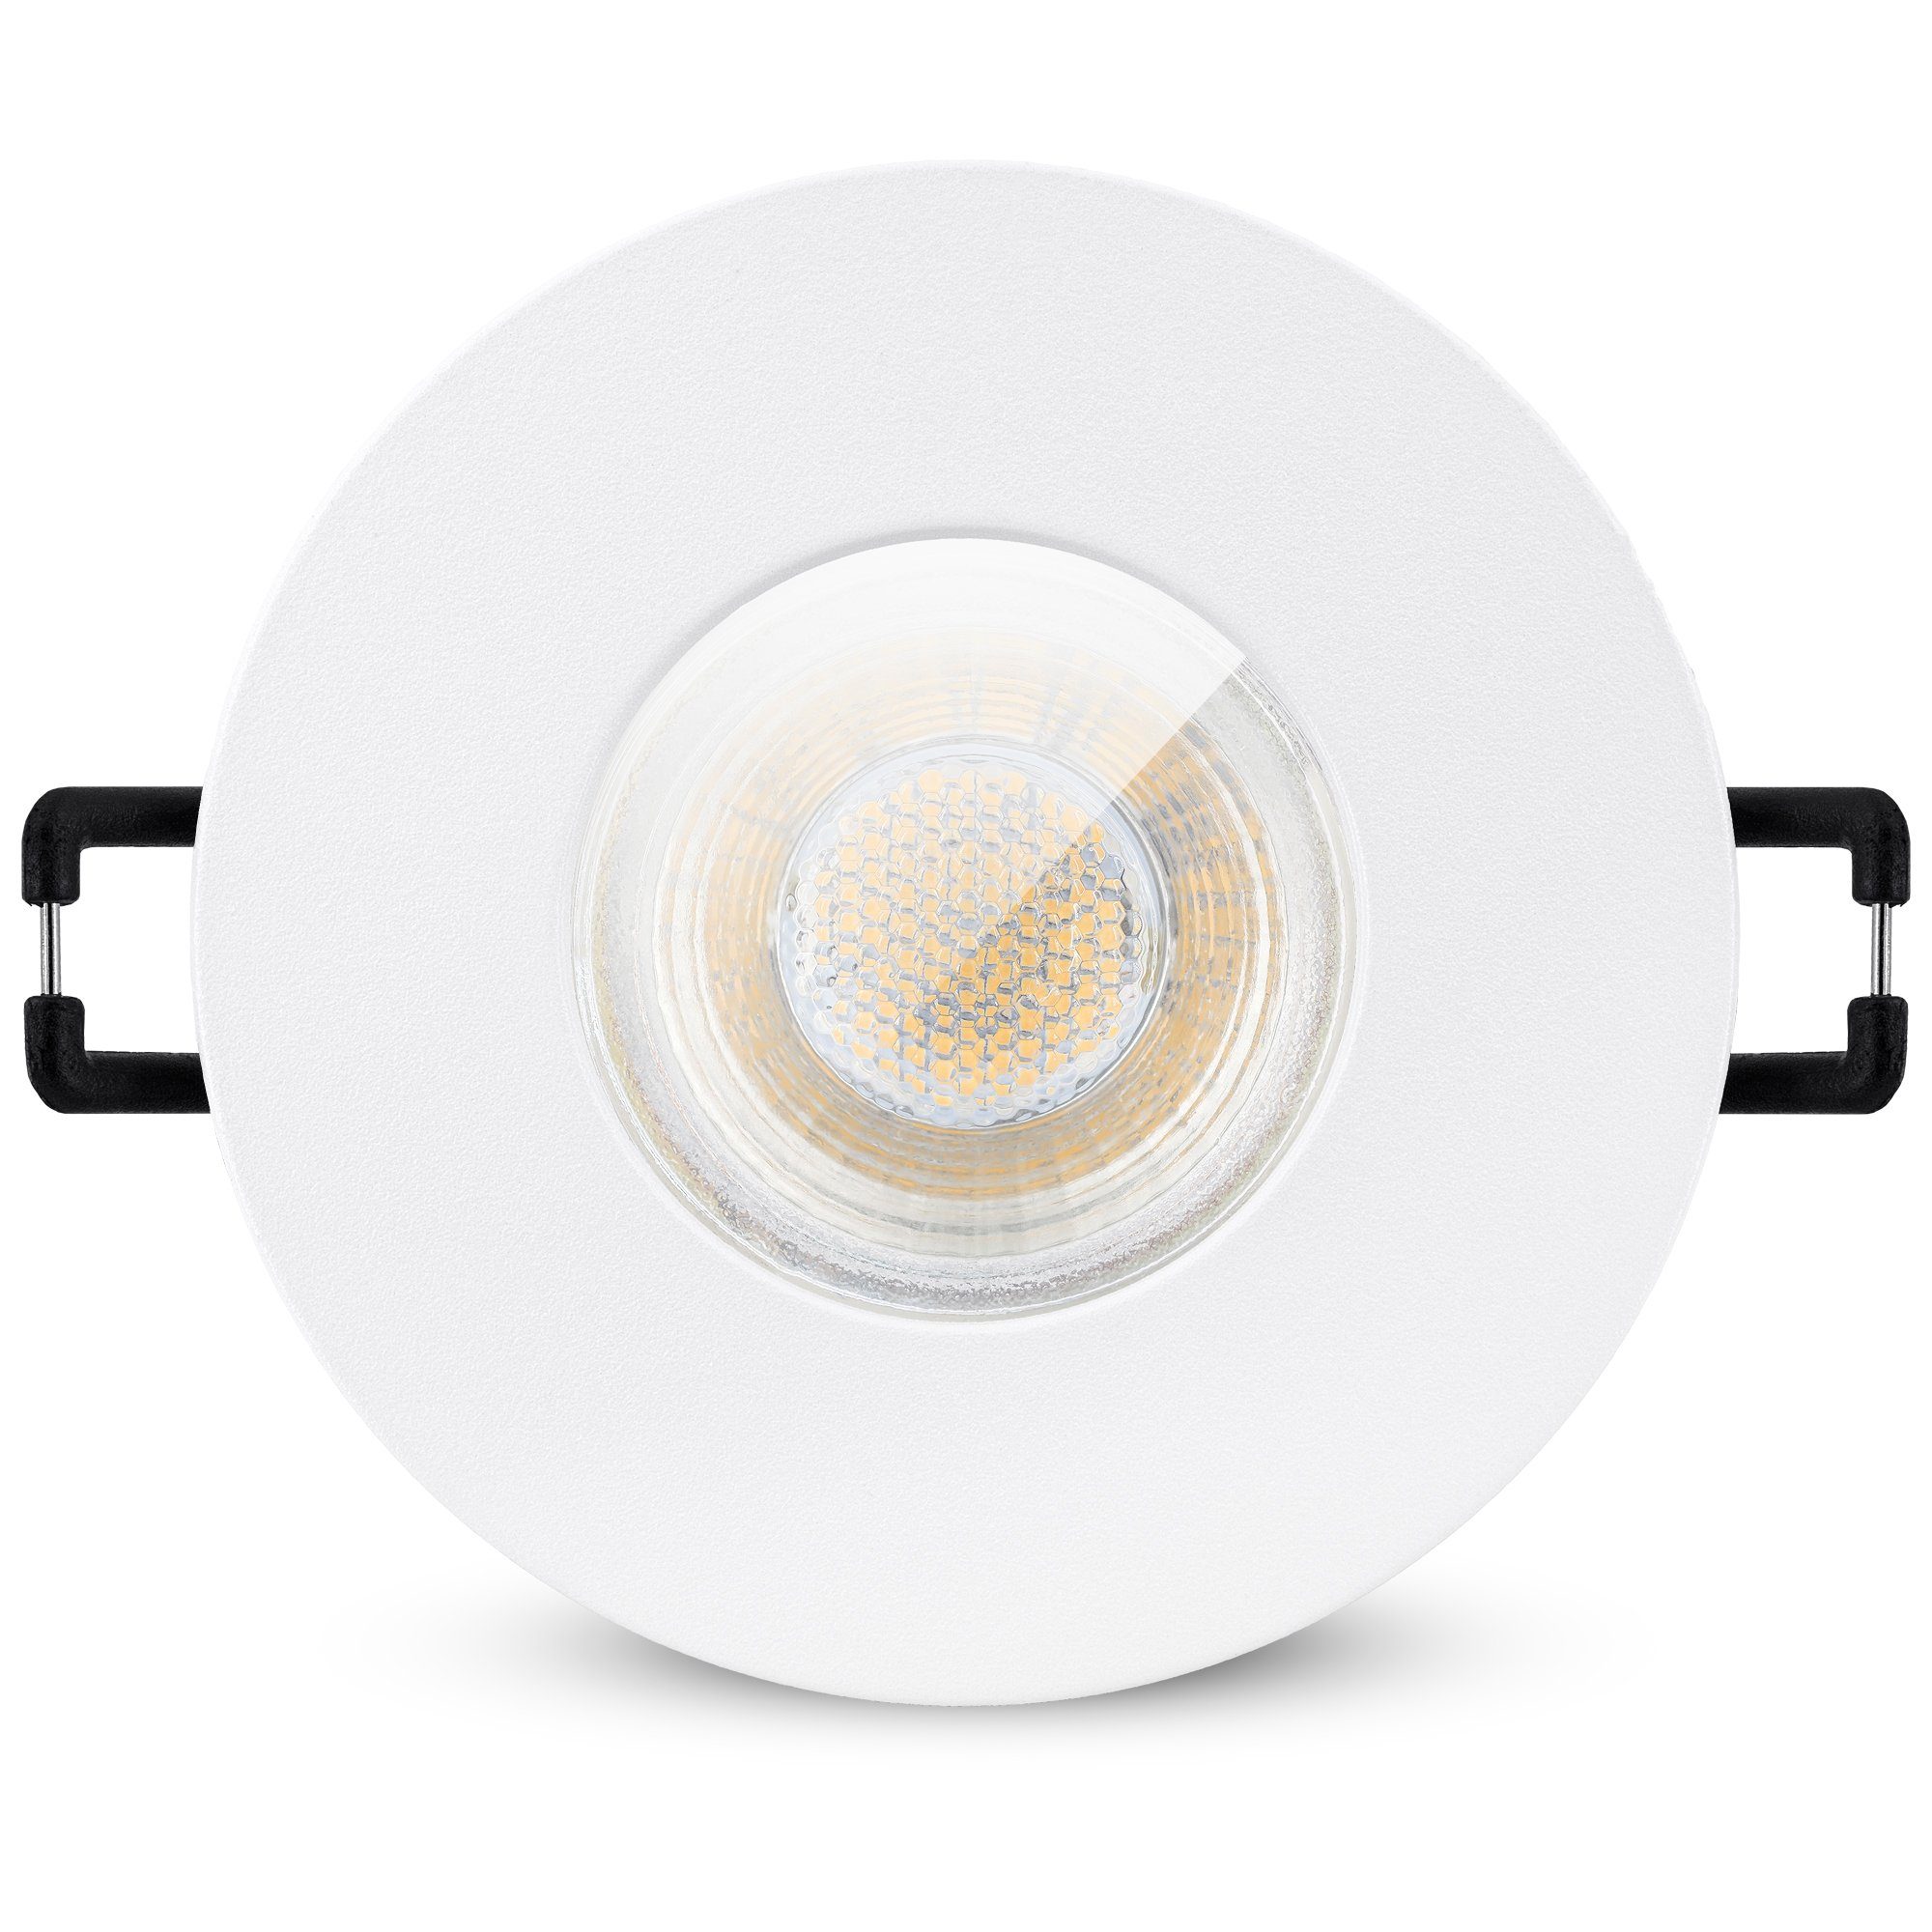 linovum LED Einbaustrahler 10er Spot, Set IP65 neutralweiss 6W inklusive 230V Leuchtmittel - Leuchtmittel LED inklusive, GU10 Einbauleuchten